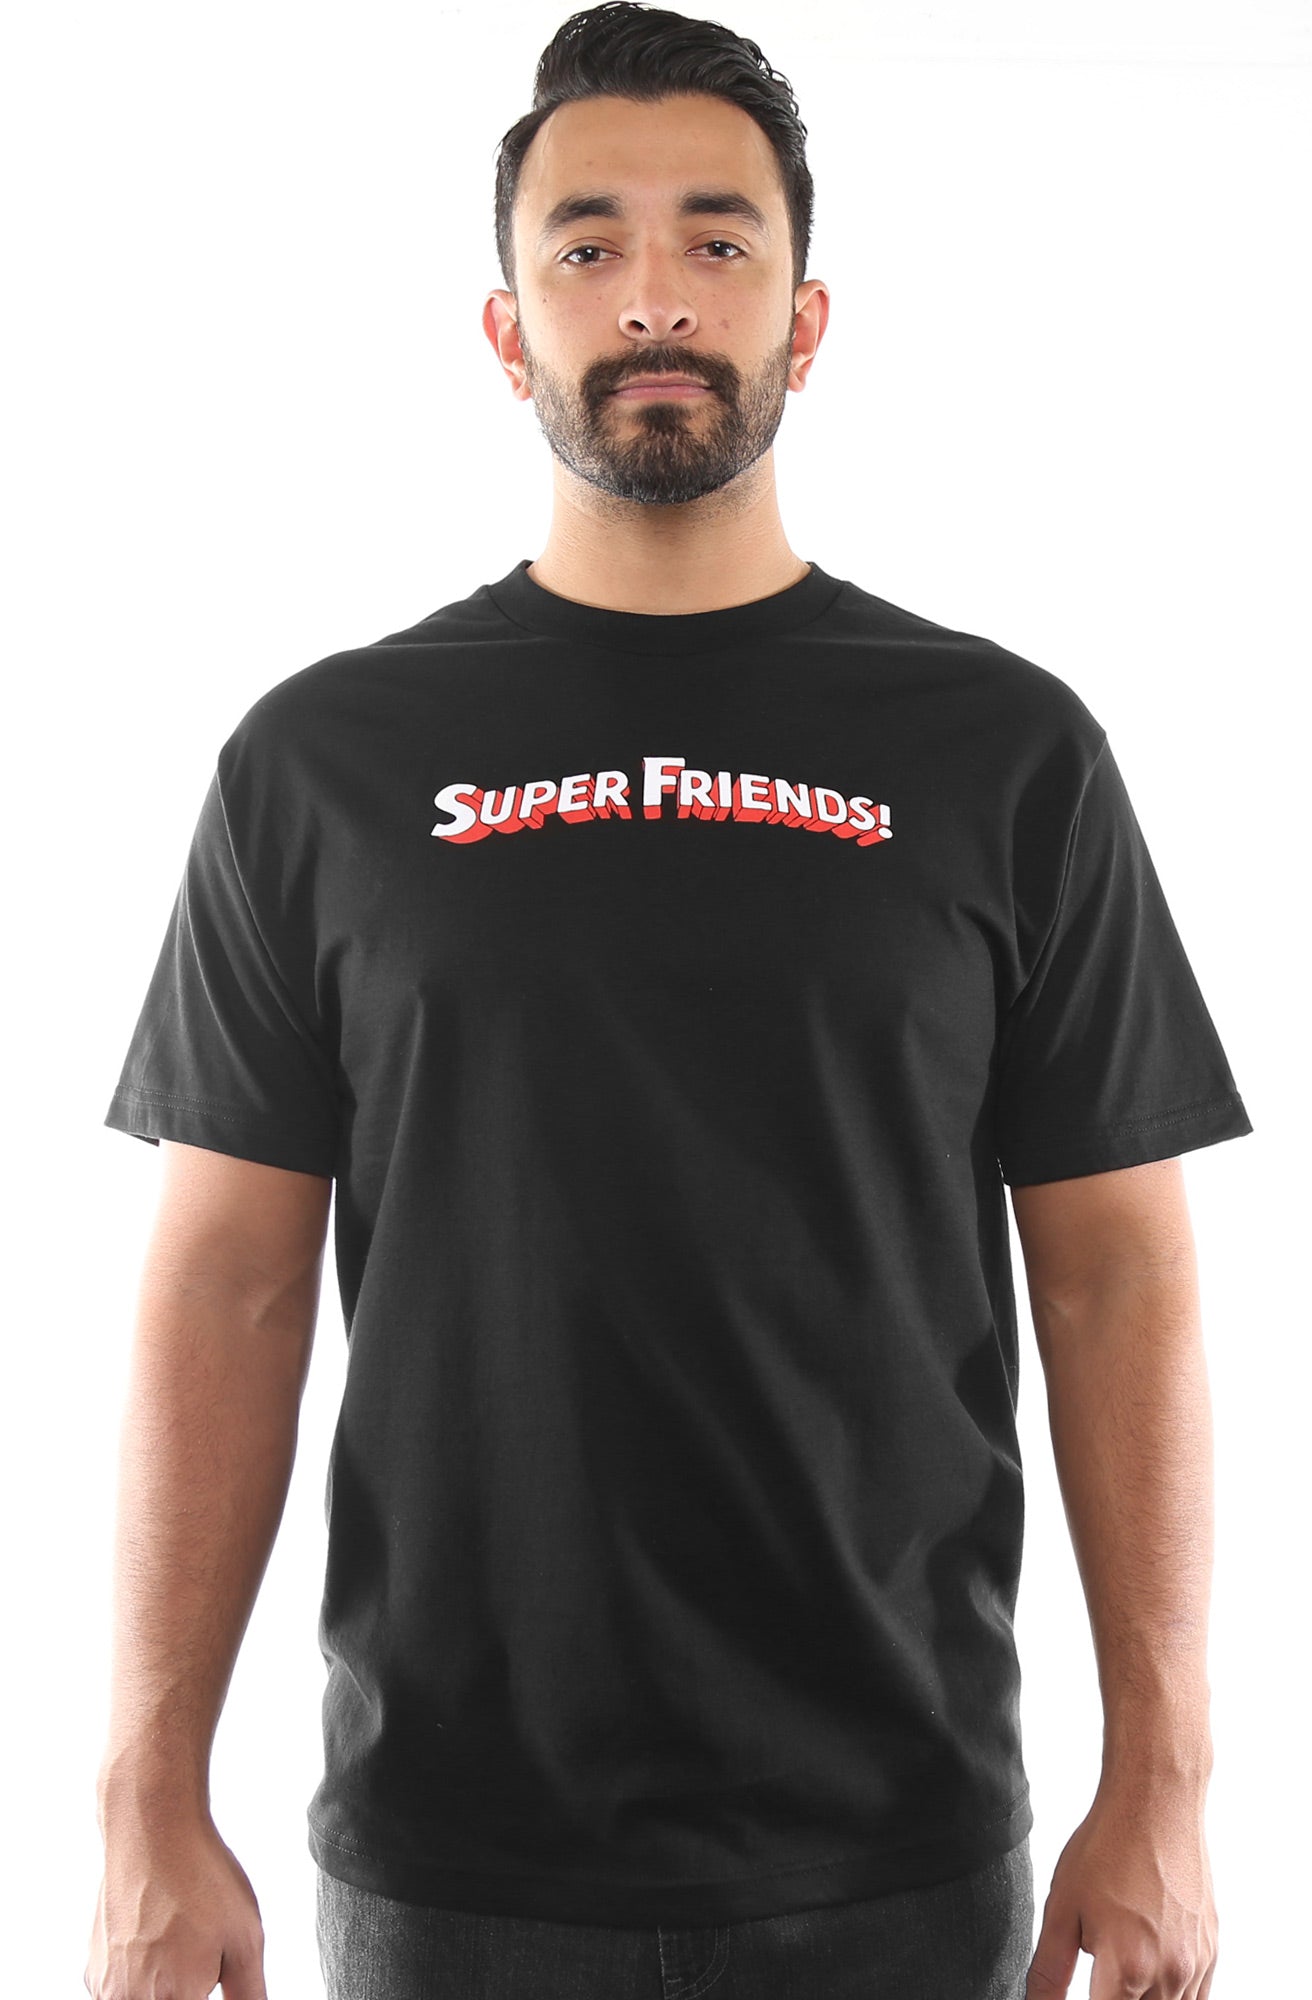 Super Friends x Adapt :: Super Friends (Men's Black Tee)